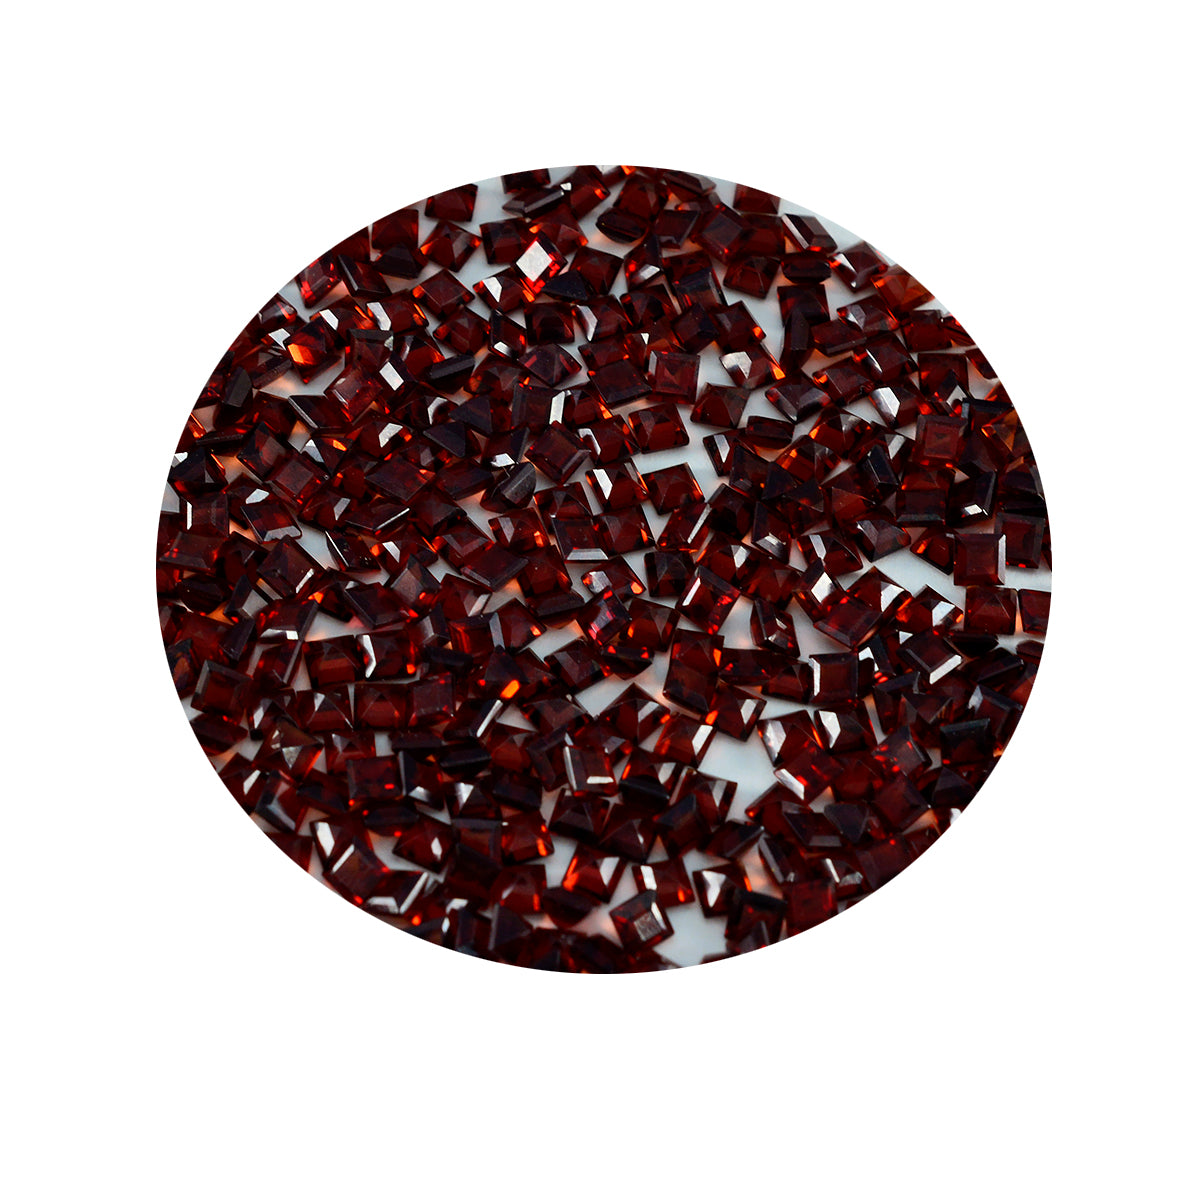 Riyogems 1PC Genuine Red Garnet Faceted 3x3 mm Square Shape A1 Quality Loose Stone